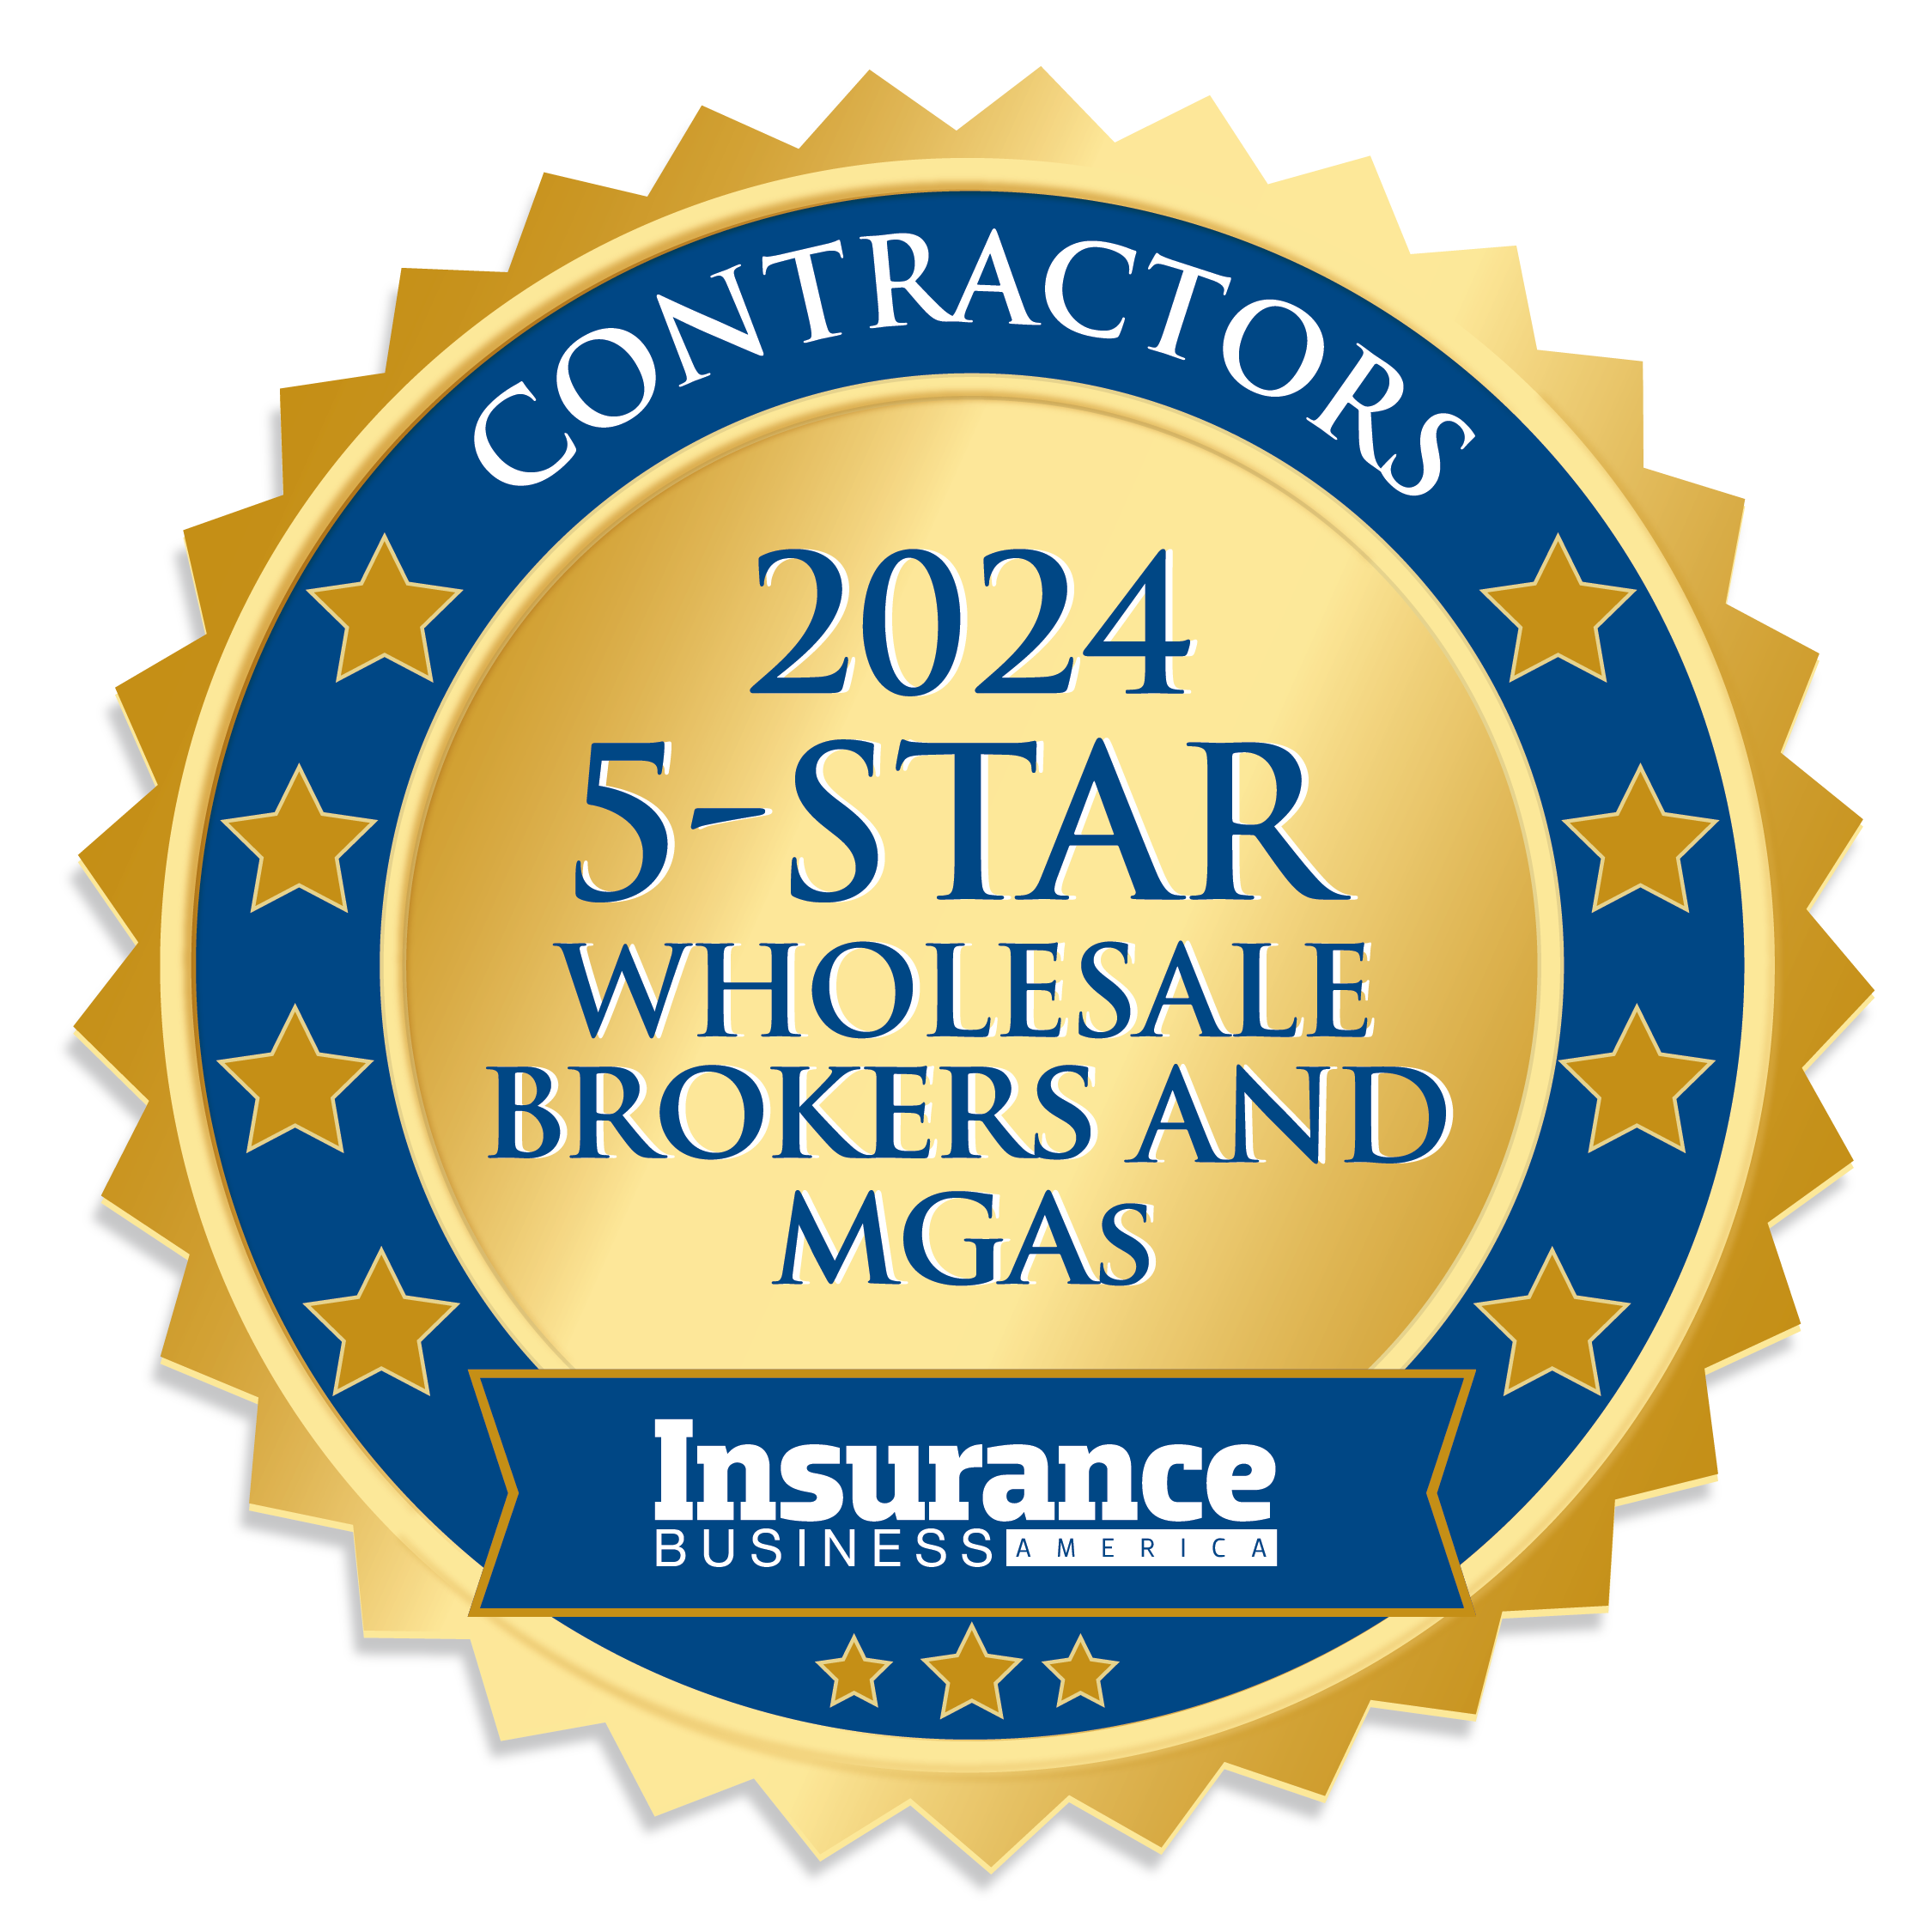 IBA 5-Star Wholesale Brokers and MGA 2024 Contractors GOLD